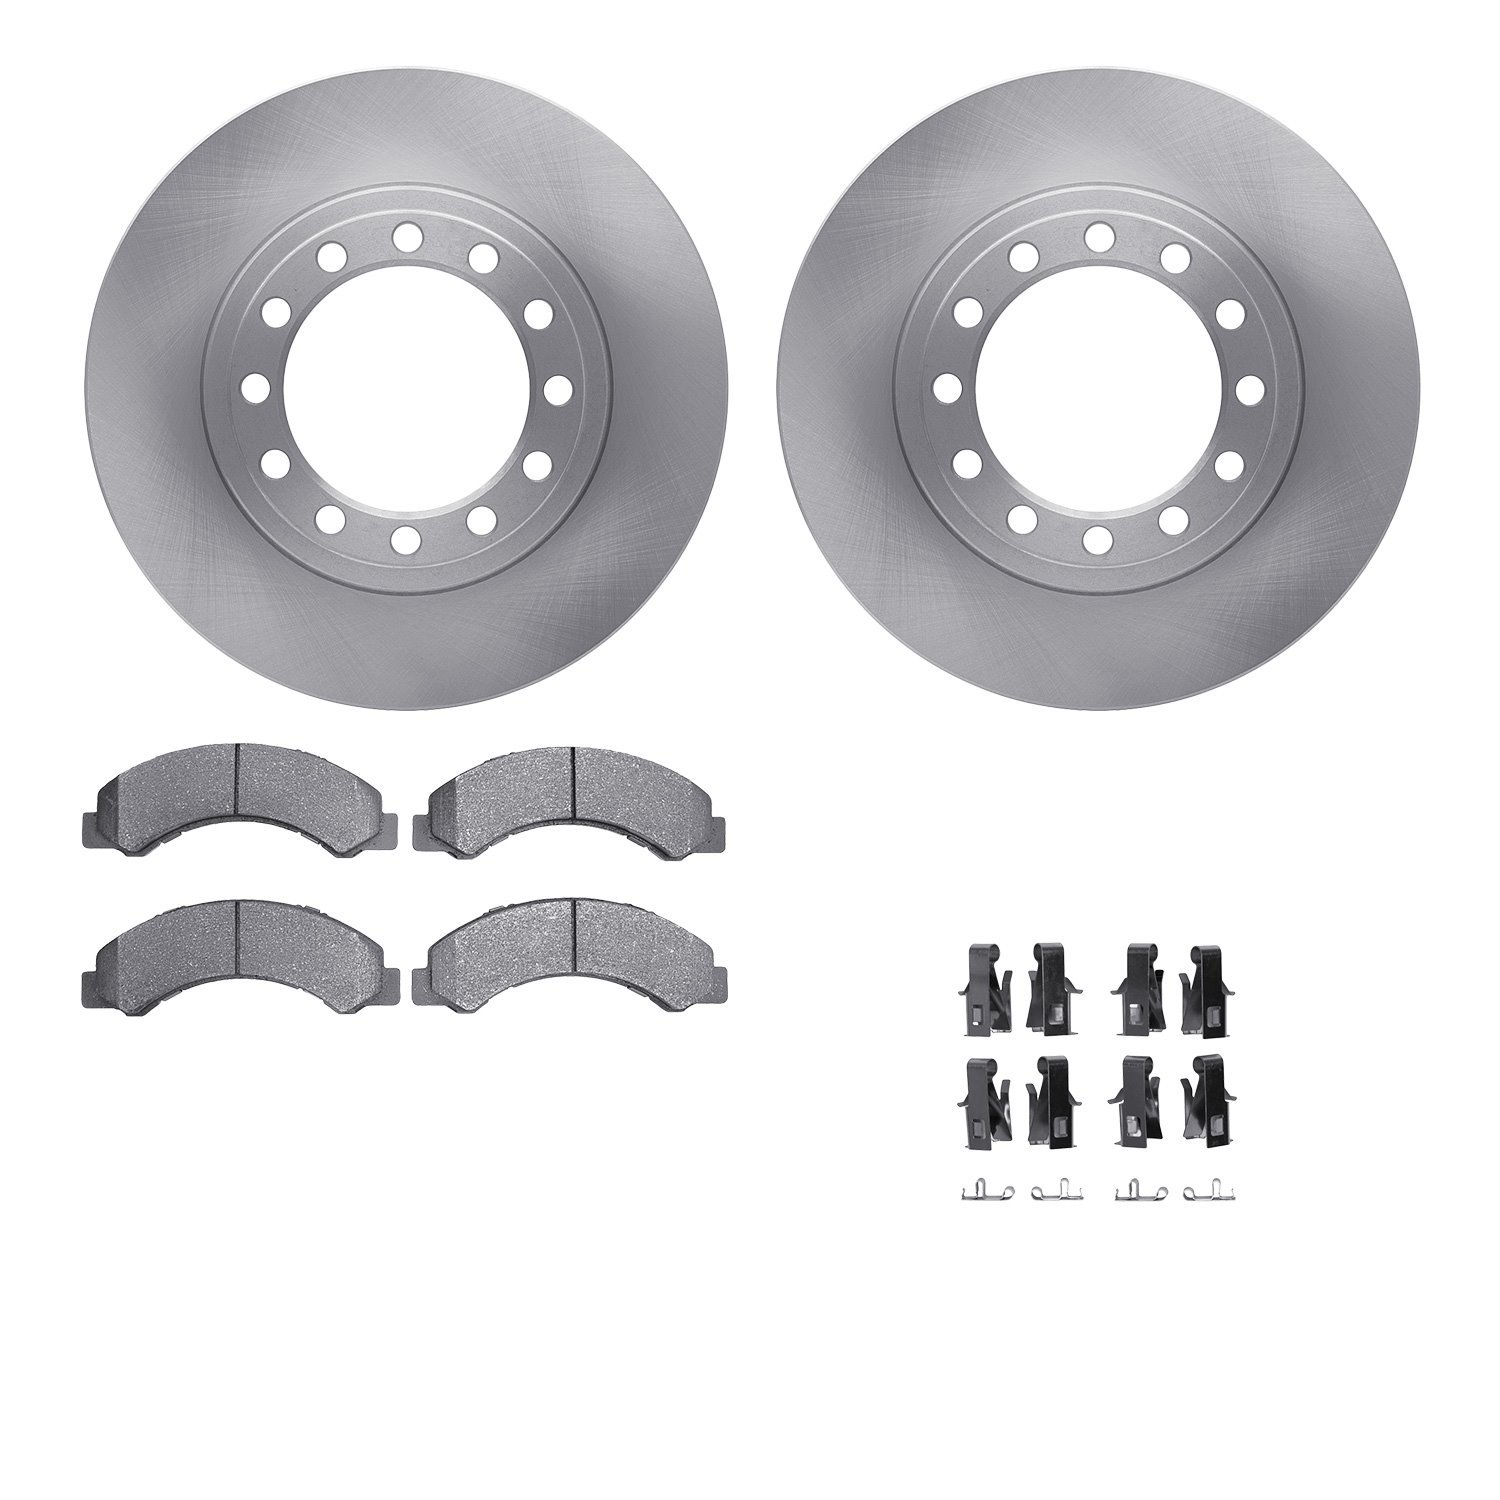 6212-48393 Brake Rotors w/Heavy-Duty Brake Pads Kit & Hardware, Fits Select GM, Position: Front